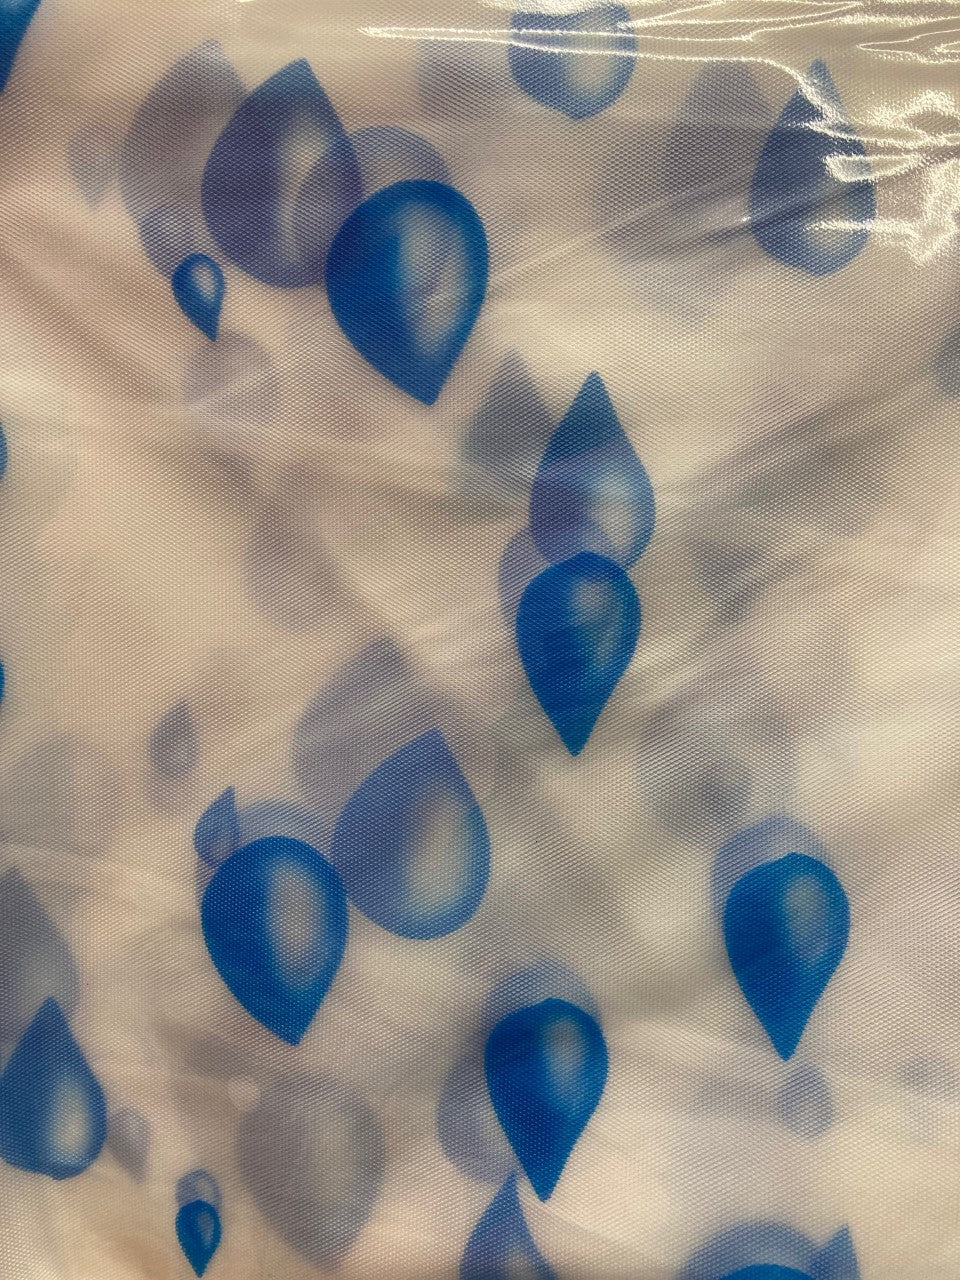 Rain Drops Blue Print Shower Curtain PEVA Waterproof Rings Included